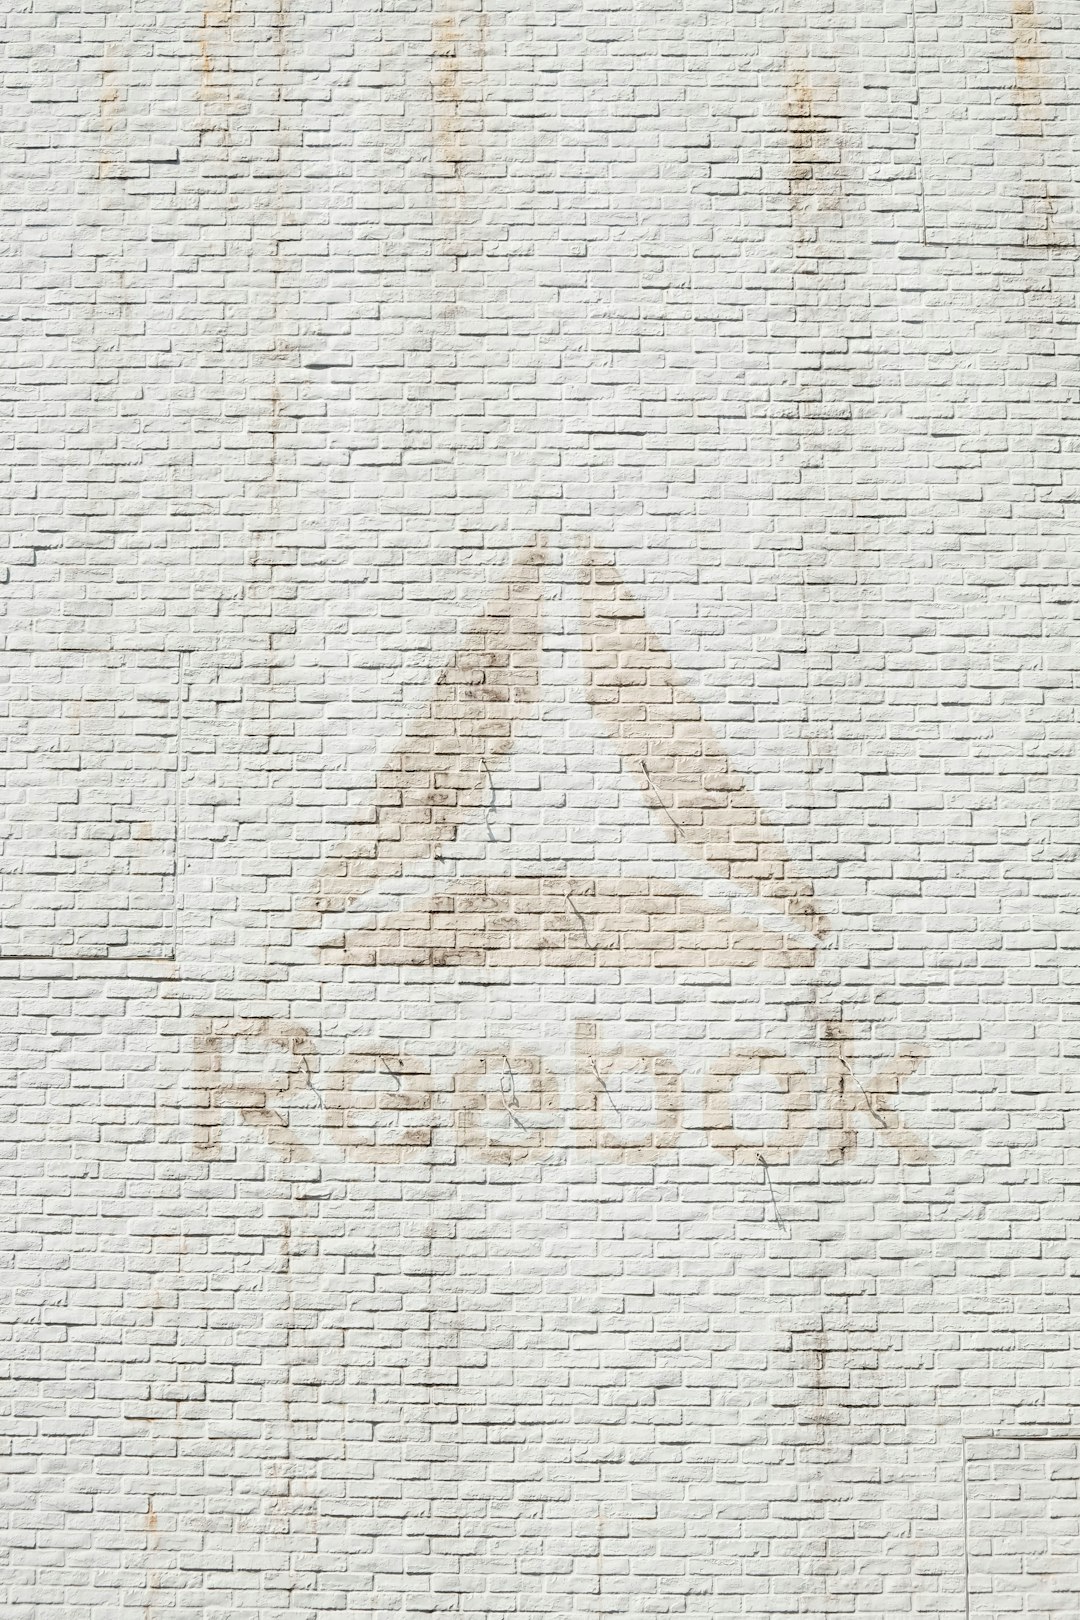 close-up photo of Reebok logo on wall